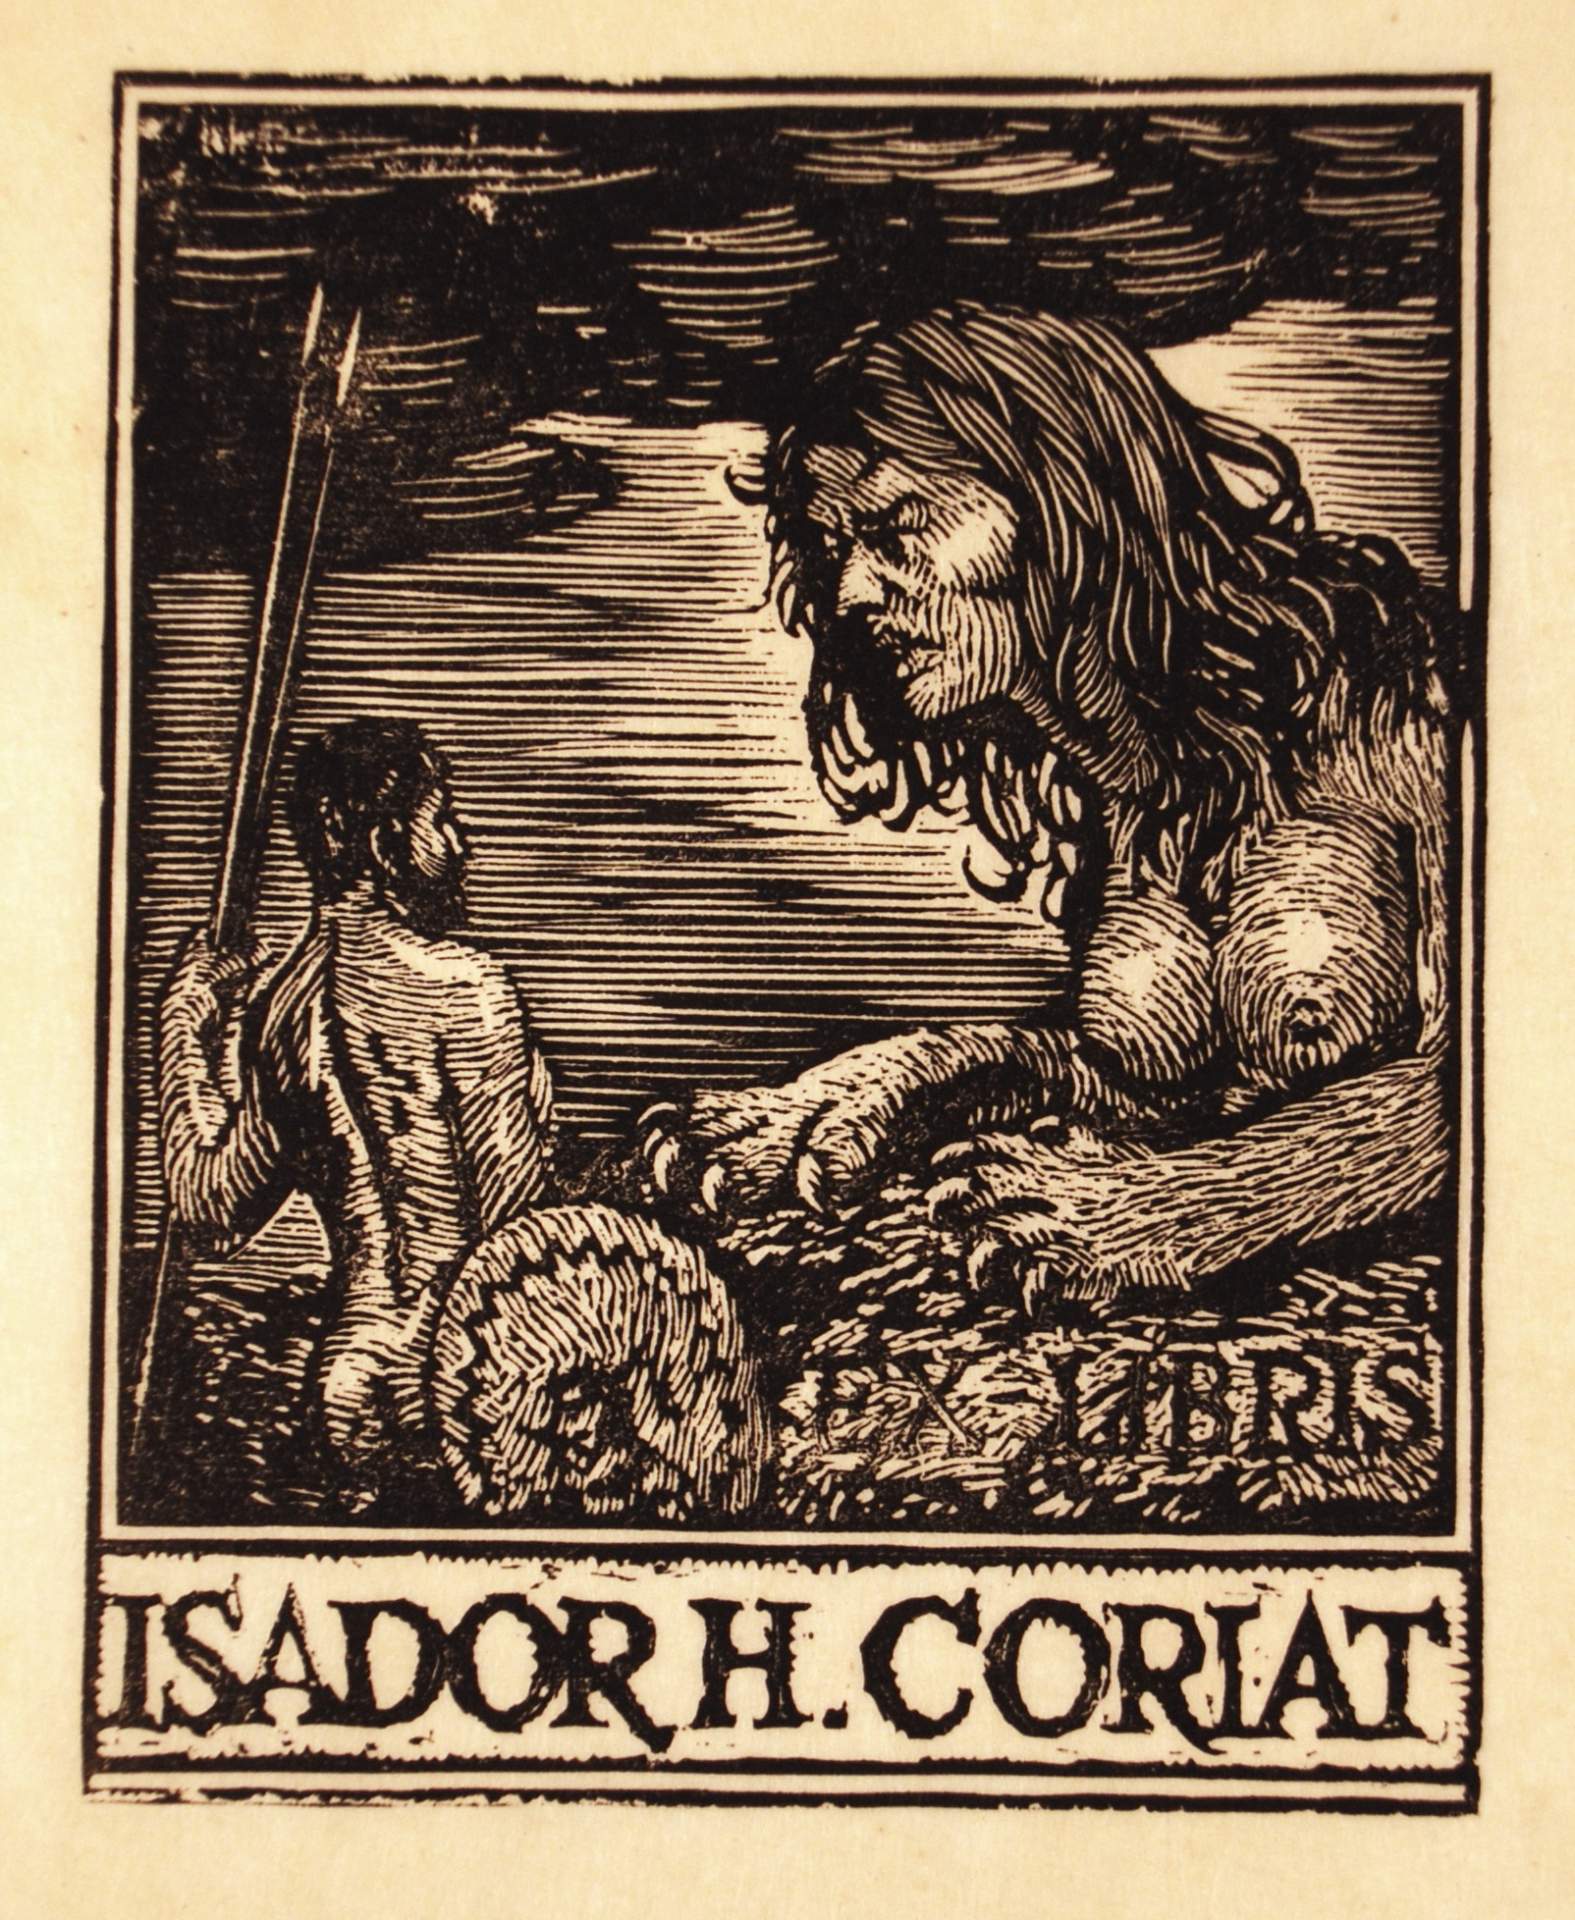 Isadore H. Coriat Bookplate I